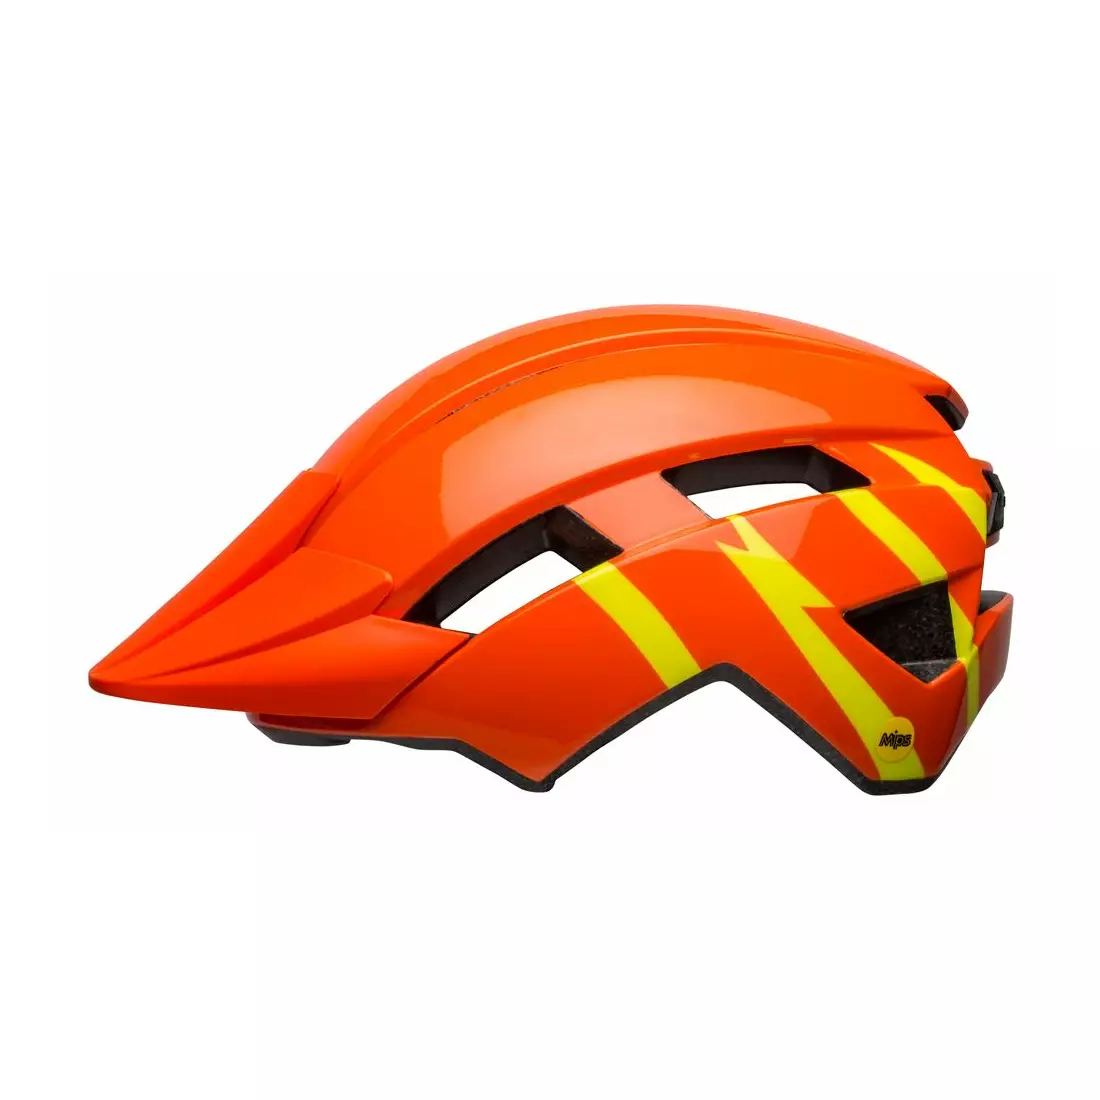 BELL dětská cyklistická helma SIDETRACK II orange yellow BEL-7127737